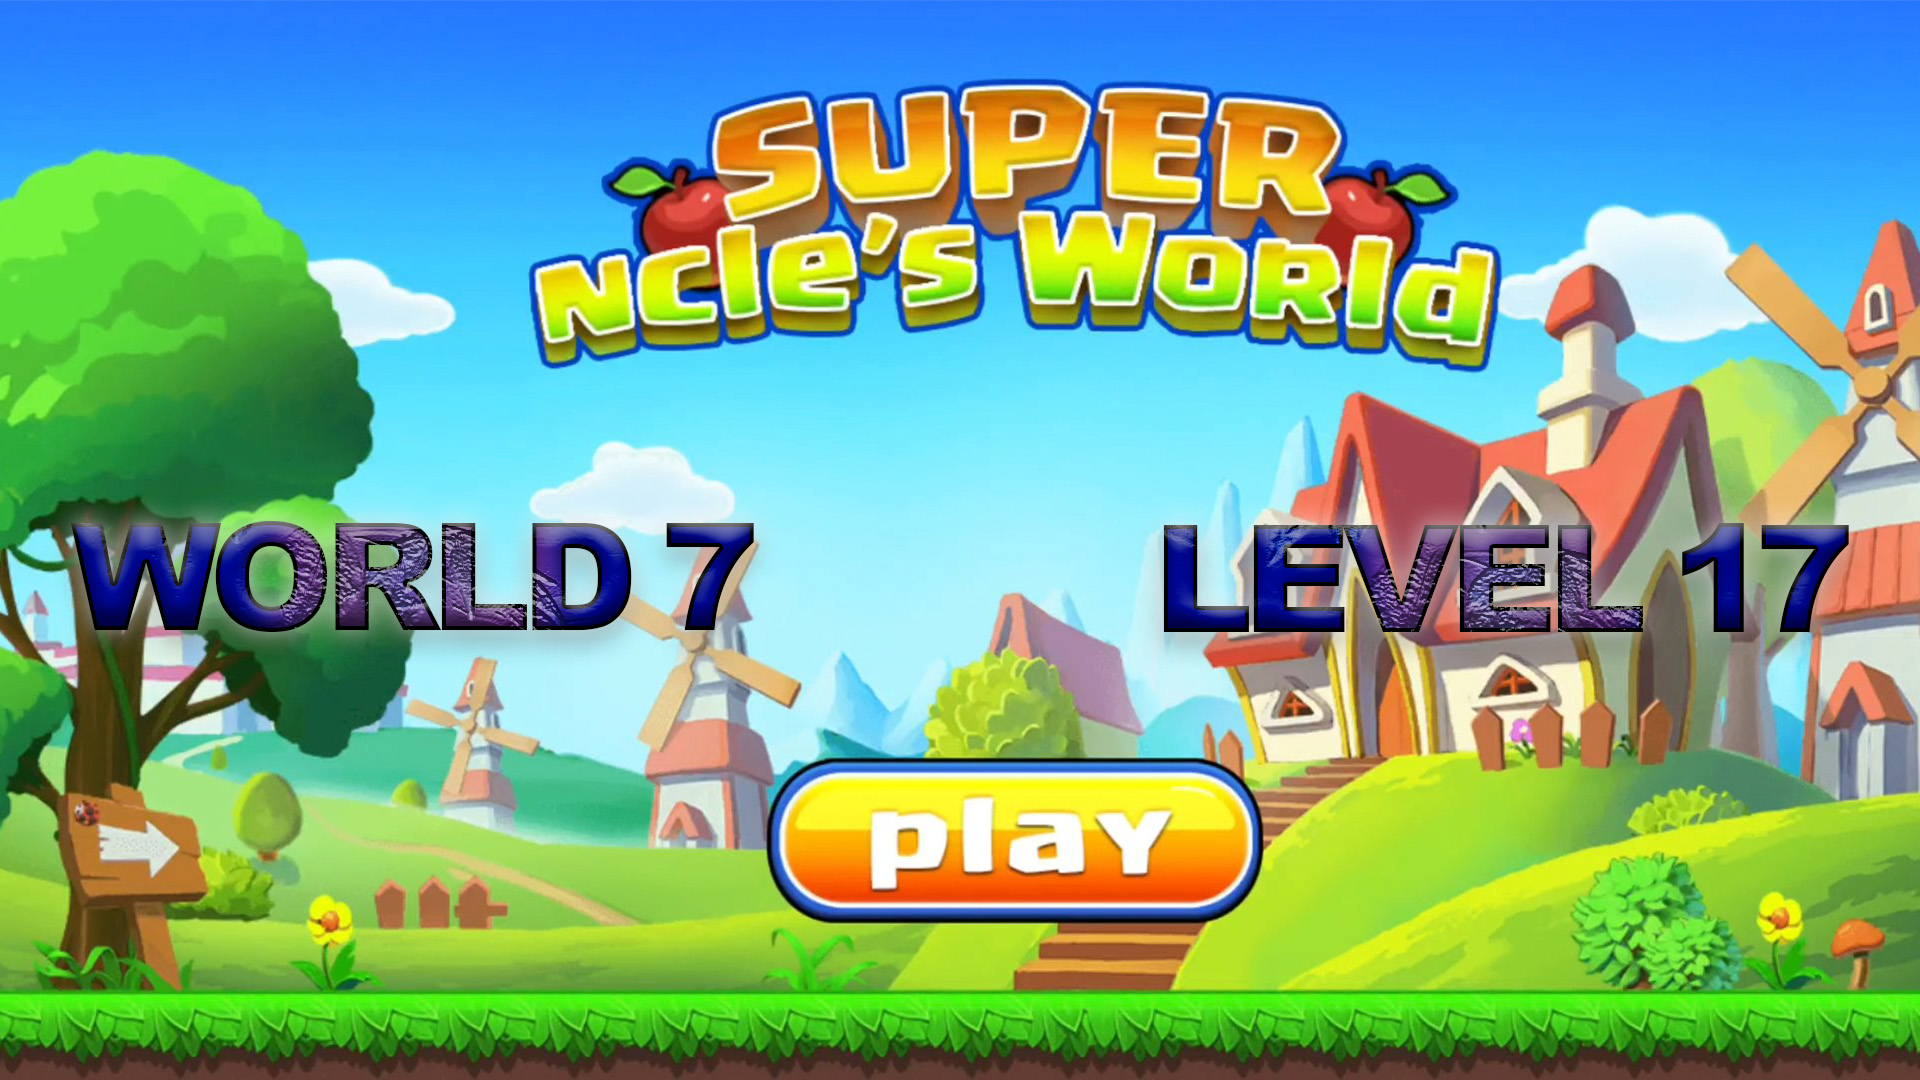 Super ncle's  World 7. Level 17.